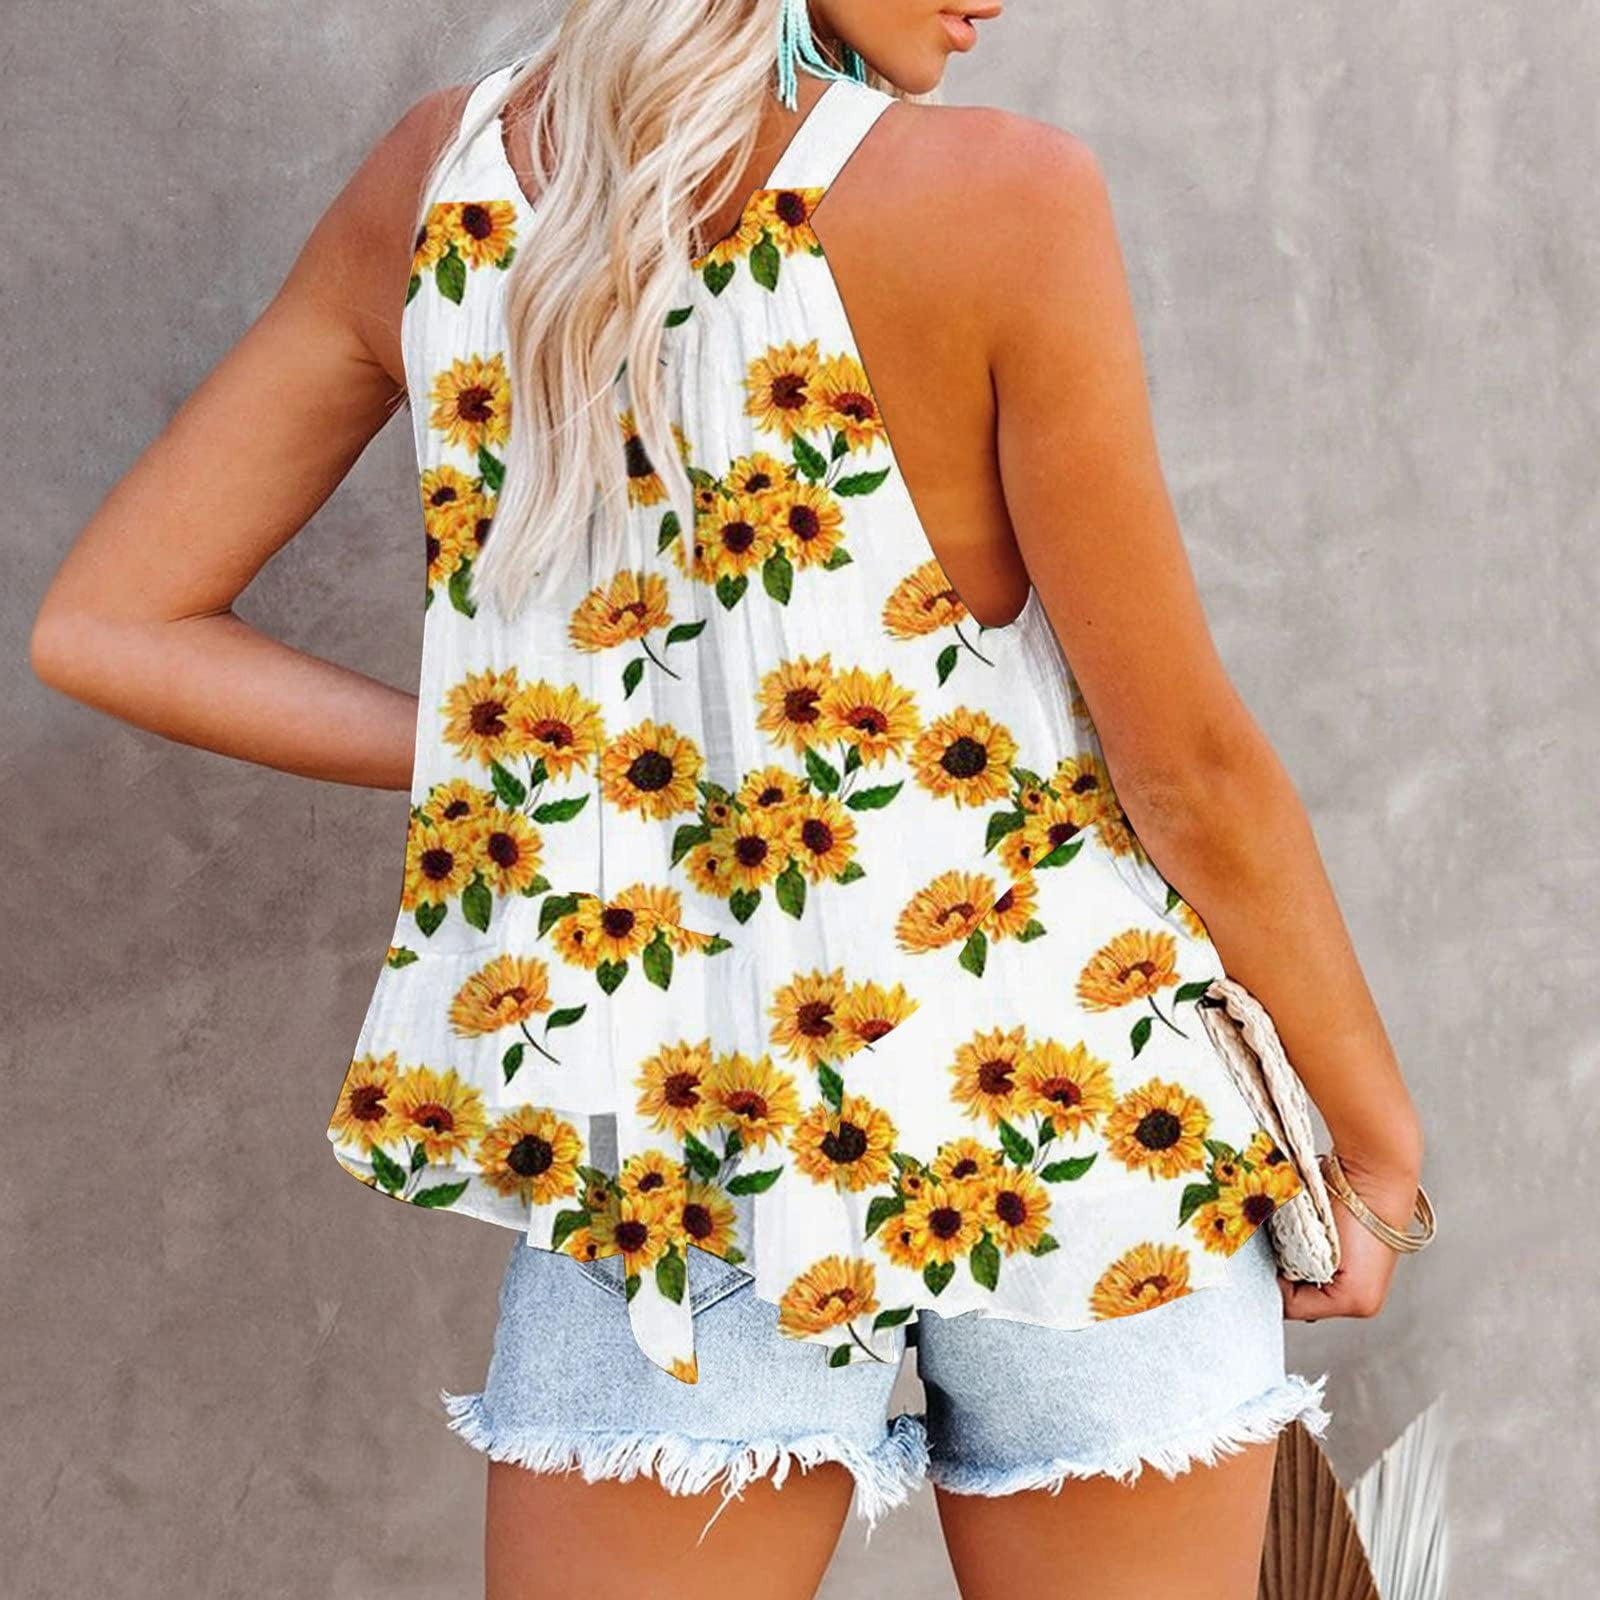 Jggspwm Women Daisy Sunflower Pint Tank Tops Sleeveless Shirts Halter Neck Tees Ruffle Flowy Vest Summer Casual Tops Loose Fit Comfy Tshirts Black S